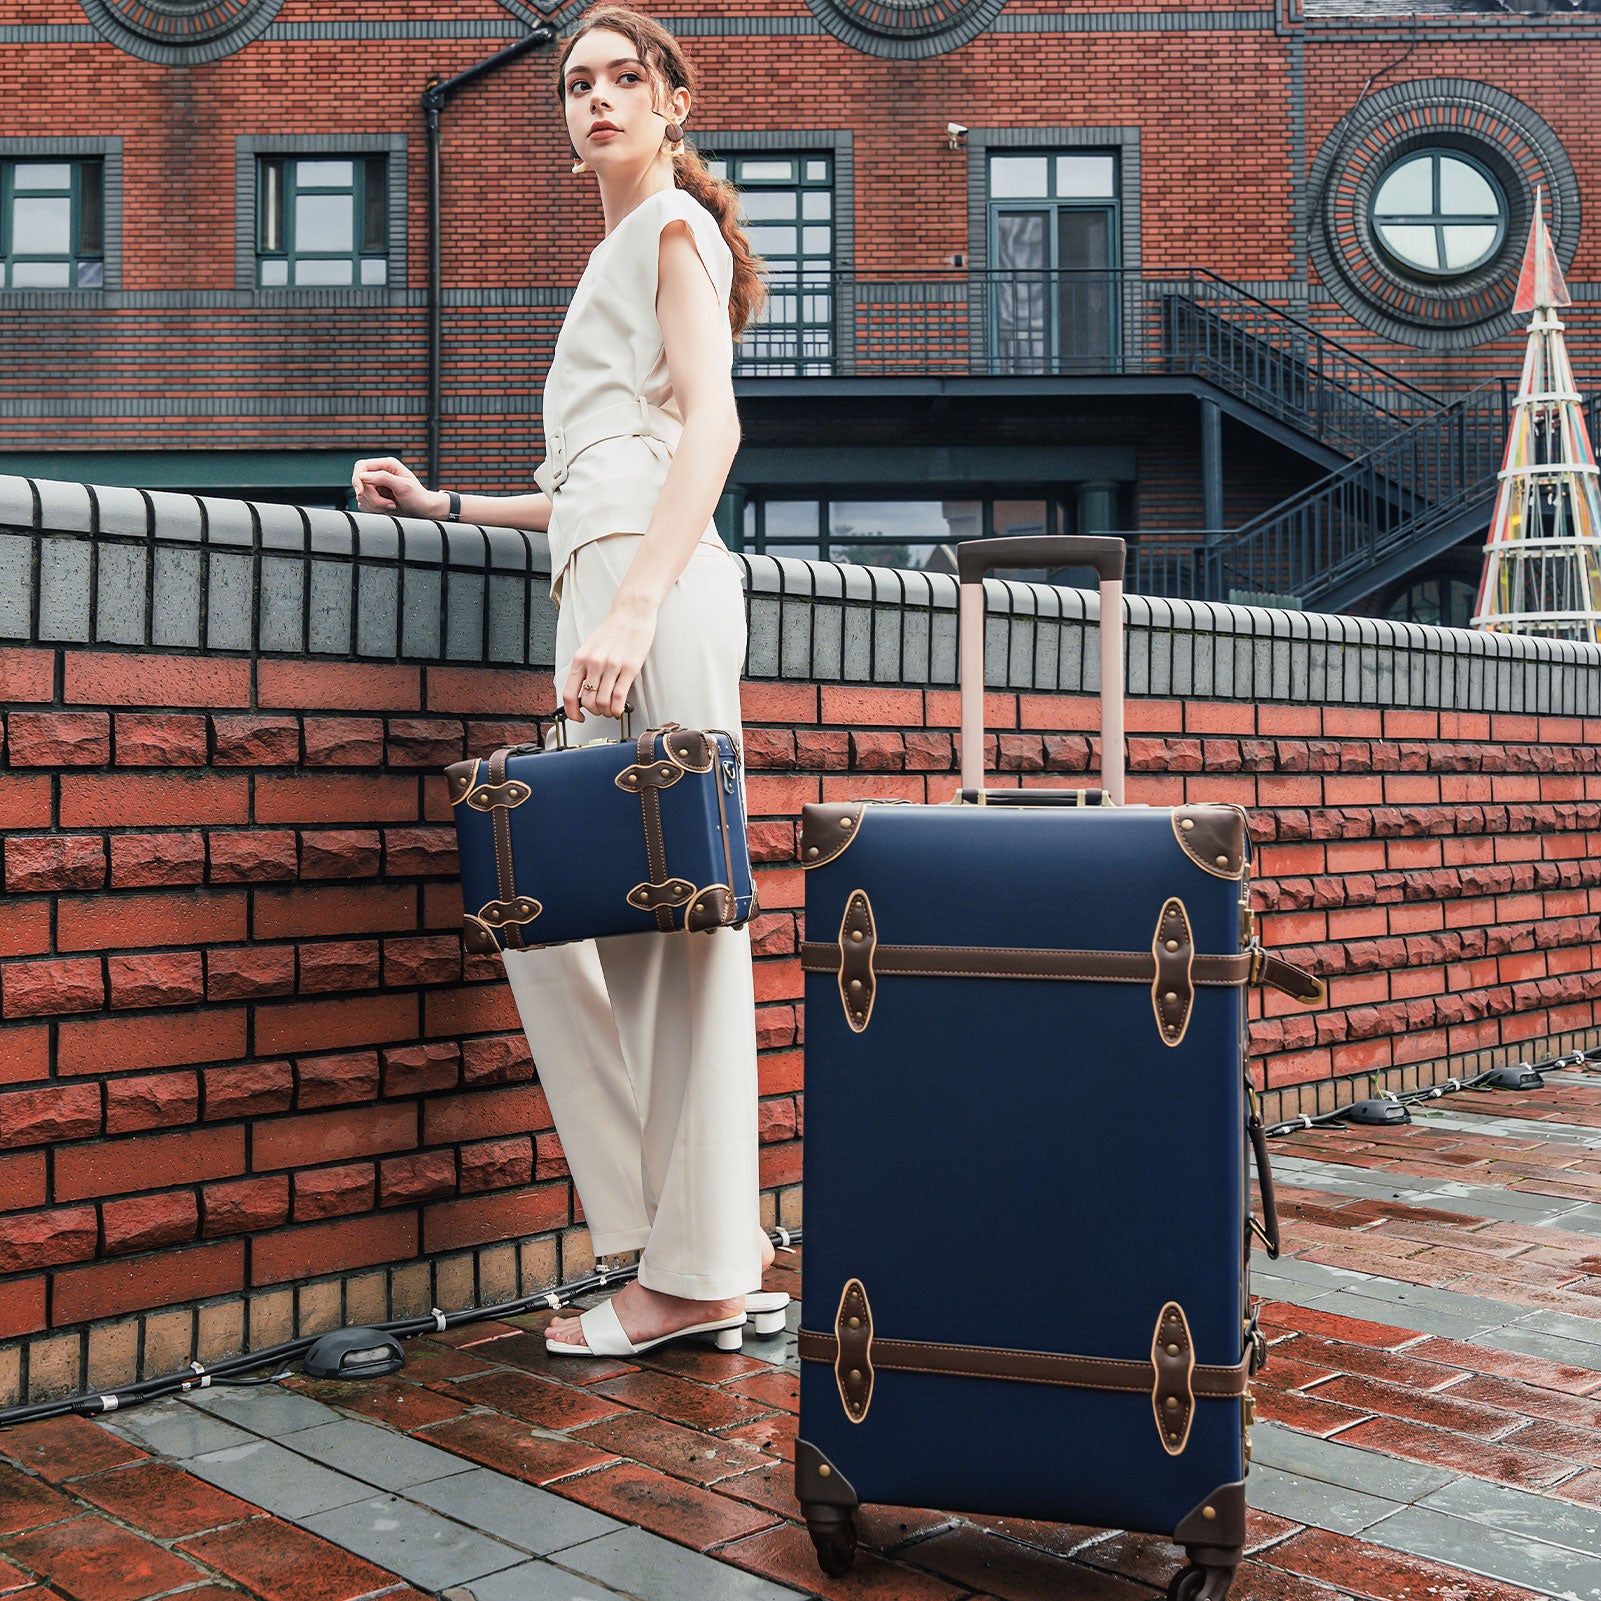 urecity vintage suitcase set for women, vintage luggage sets for women 2  piece, cute designer trunk luggage, retro suit case (Army Green, 20+12)